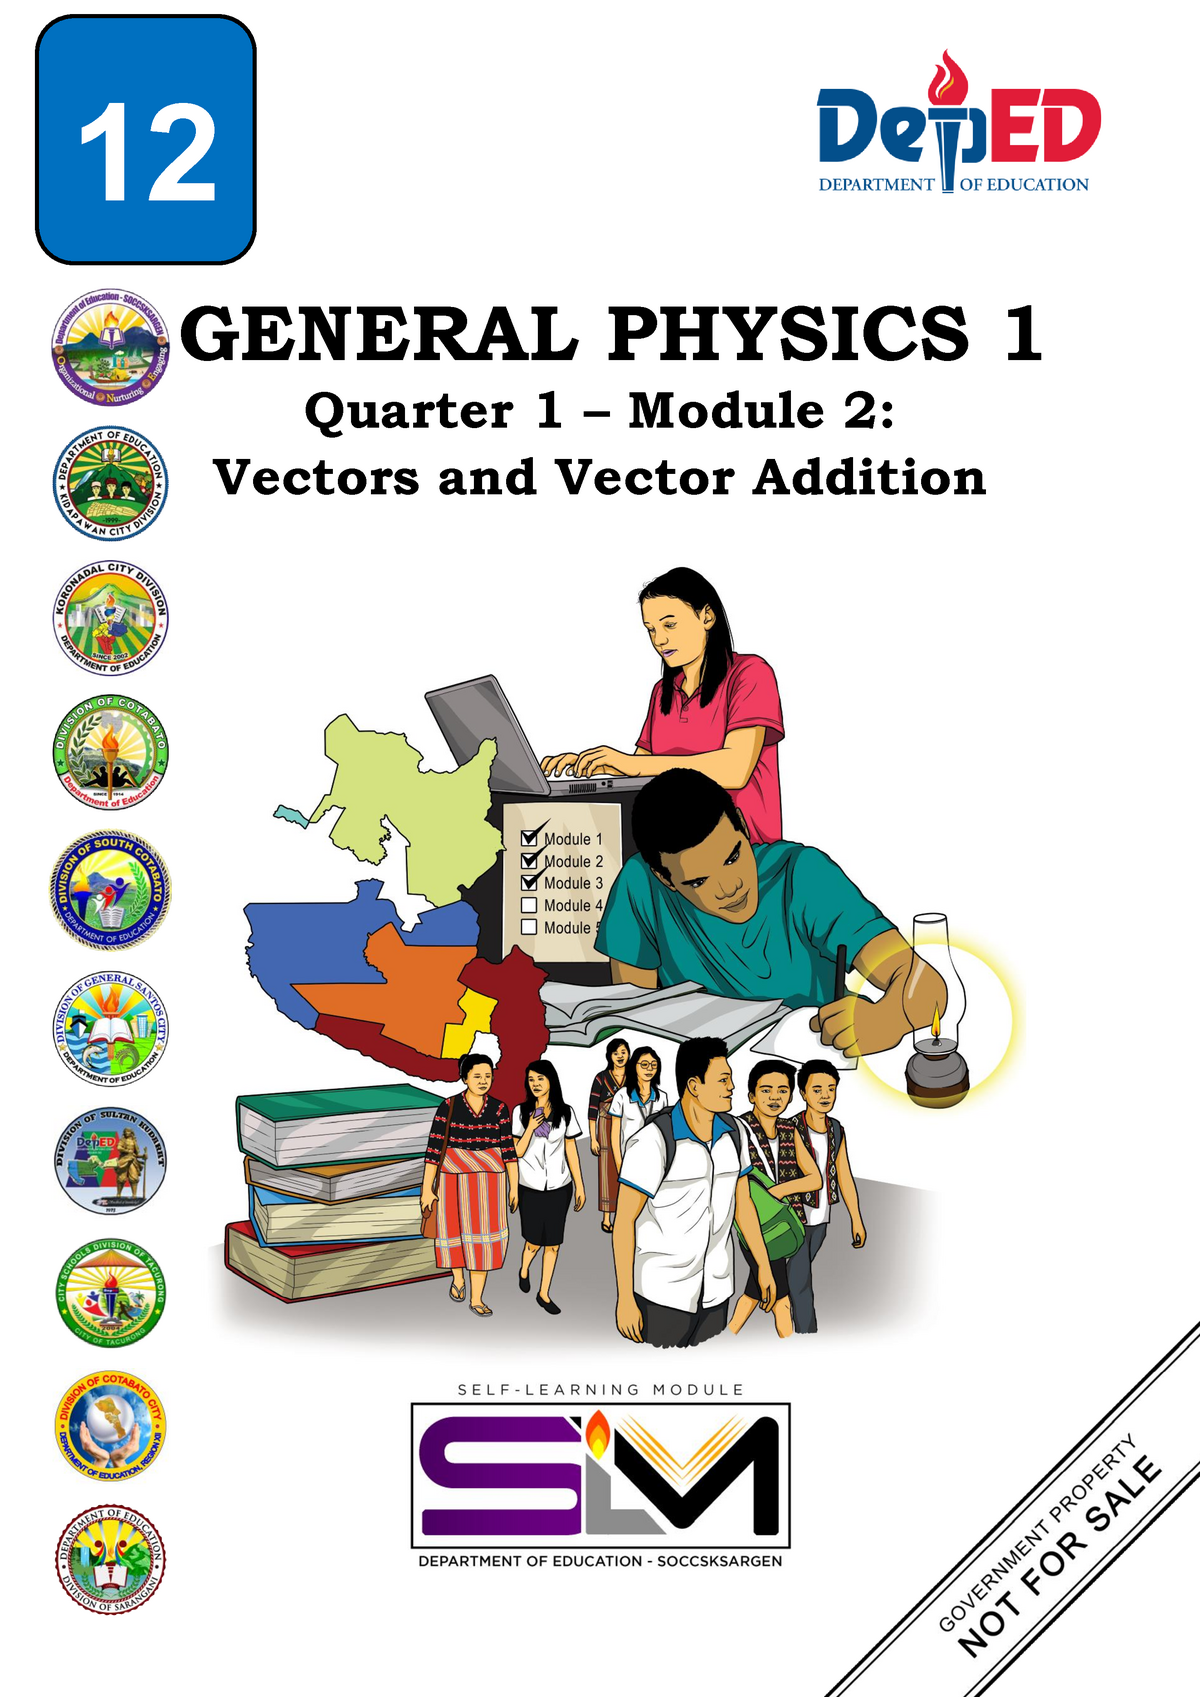 general-physics-1-module-2-quarter-1-week-2-202011-11-144735-general